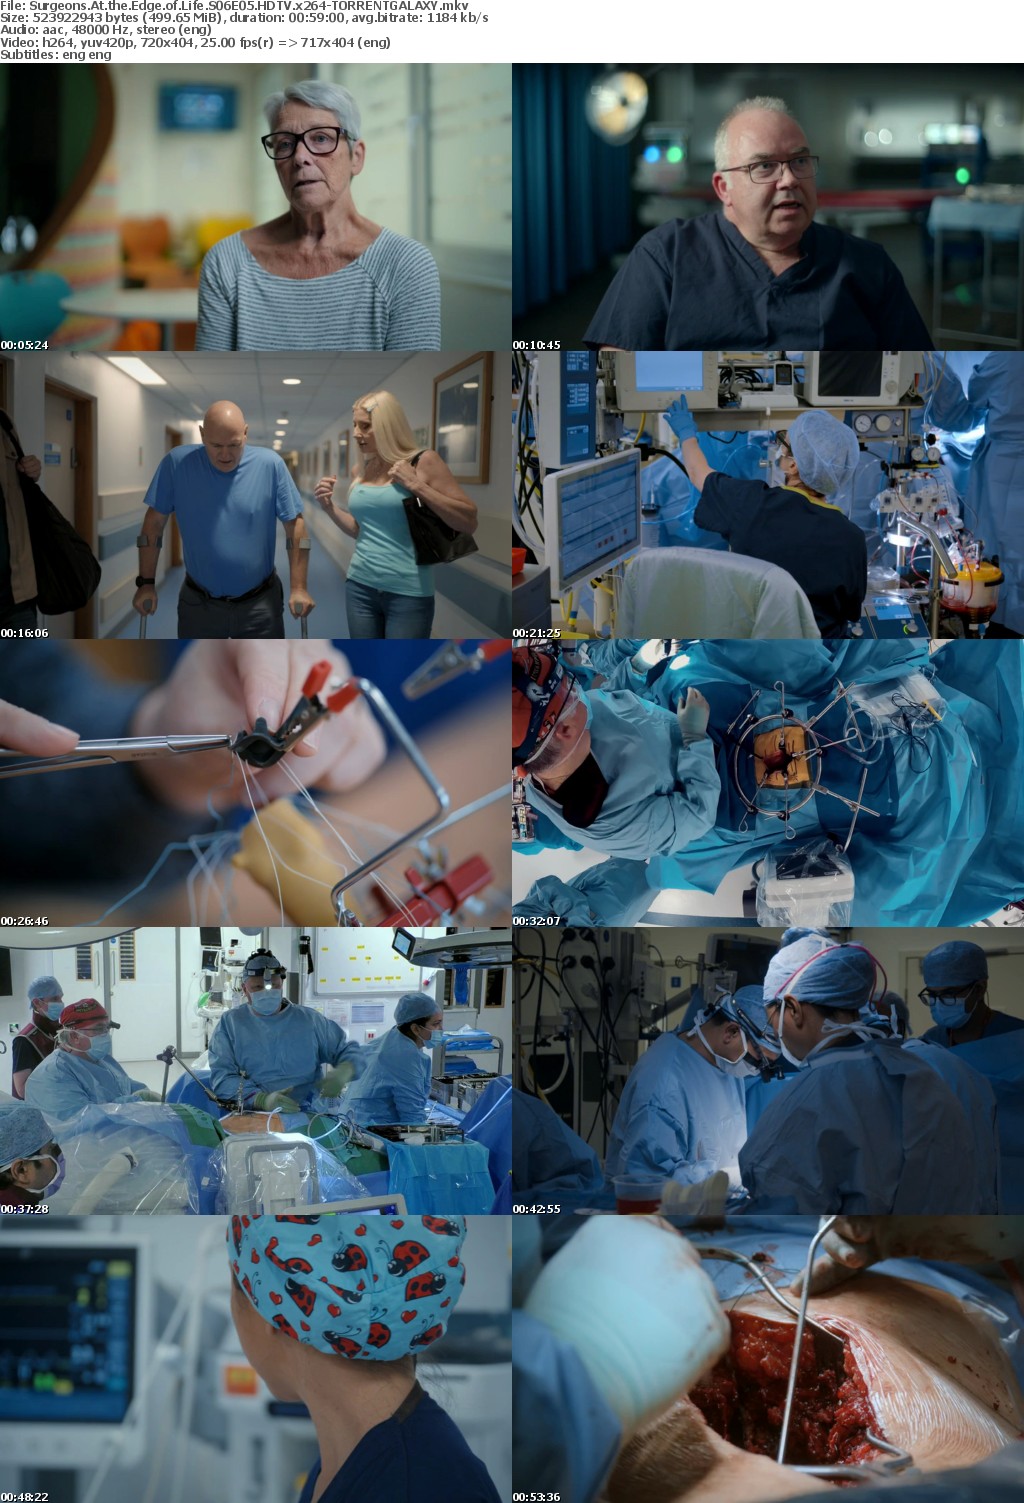 Surgeons At the Edge of Life S06E05 HDTV x264-GALAXY